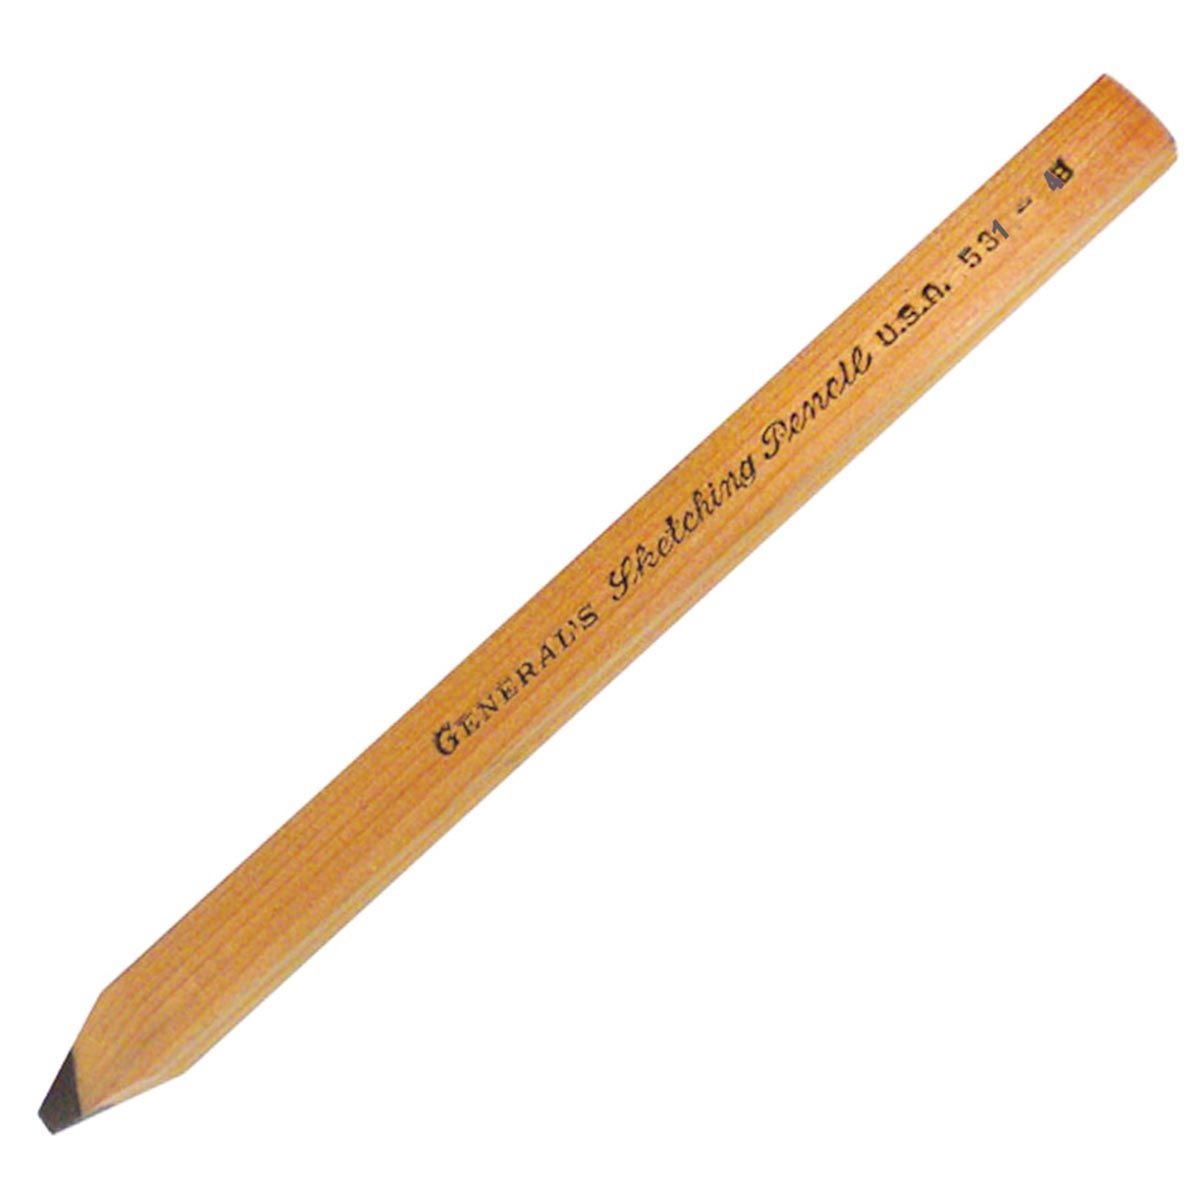 General's Sketching Flat Pencil - 4B